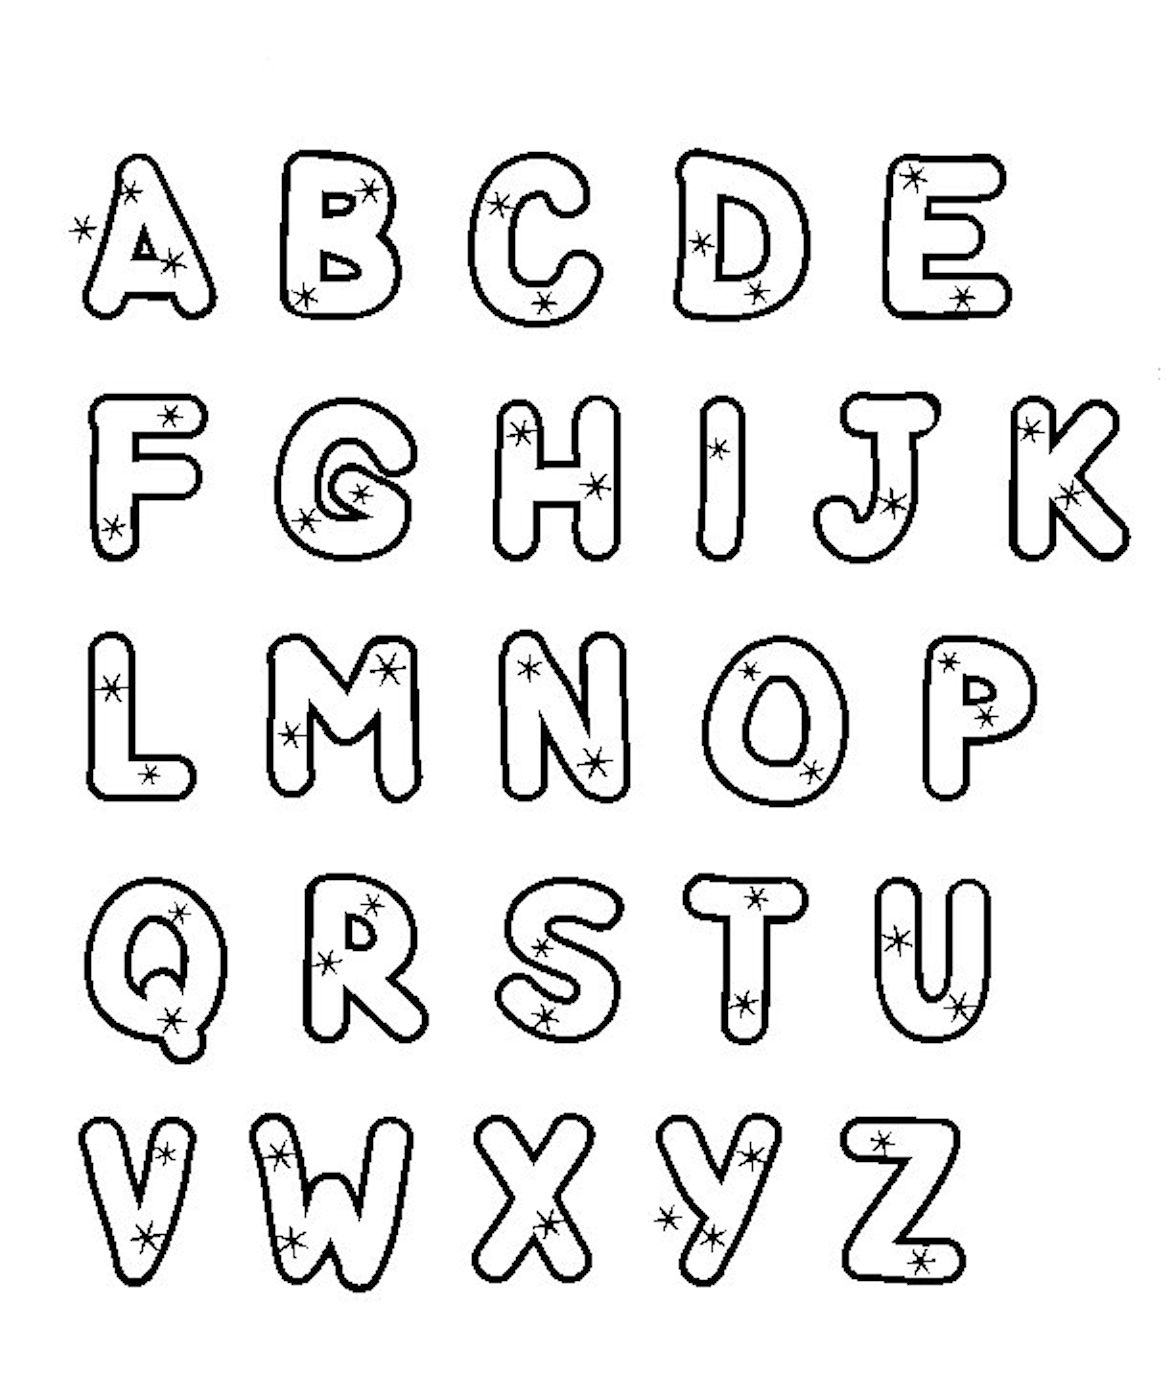 Alphabet doodle - Alphabet Coloring pages for kids to print & color